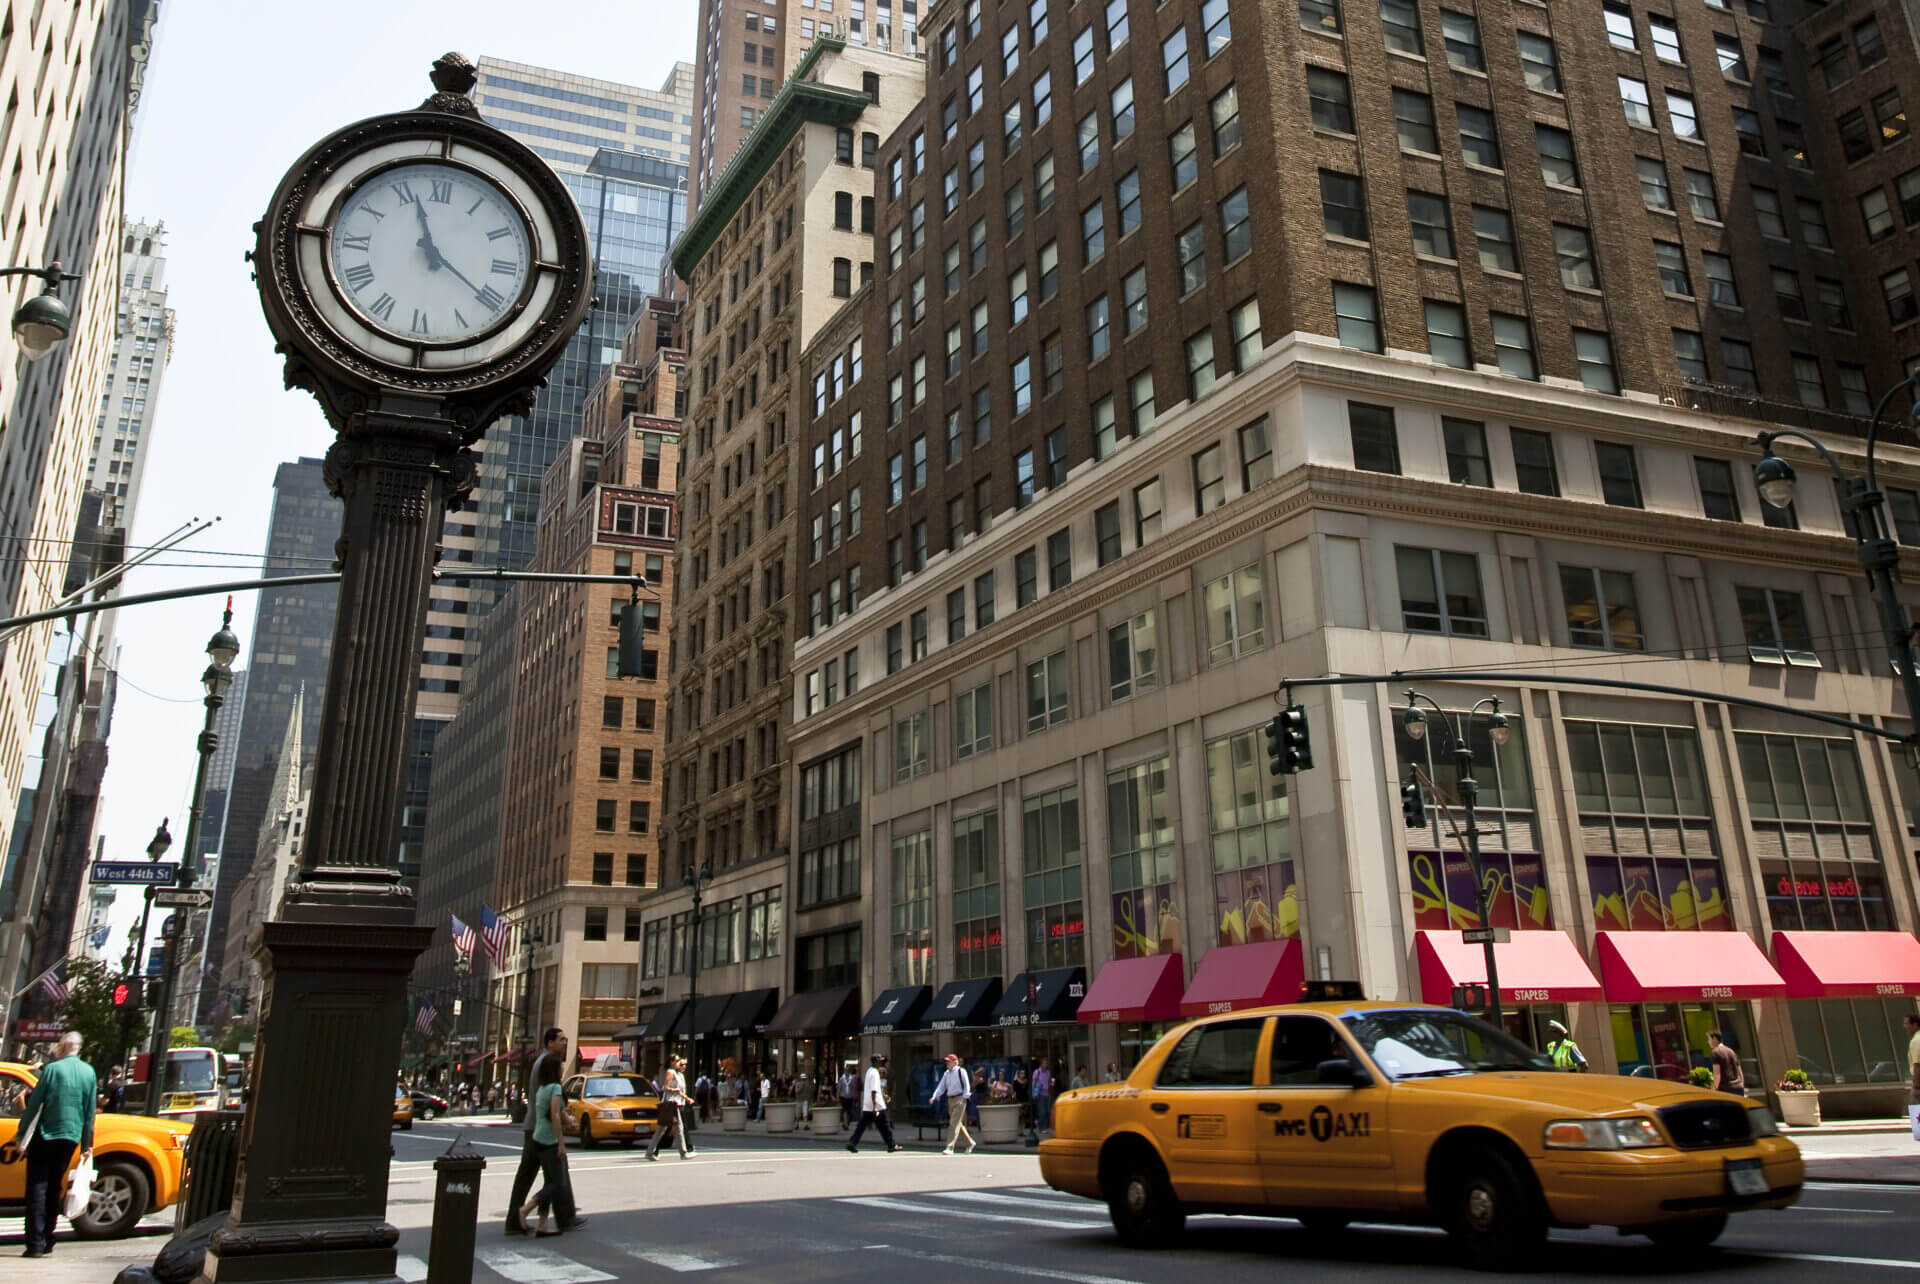 New York city cross street showing retail shop on corner.